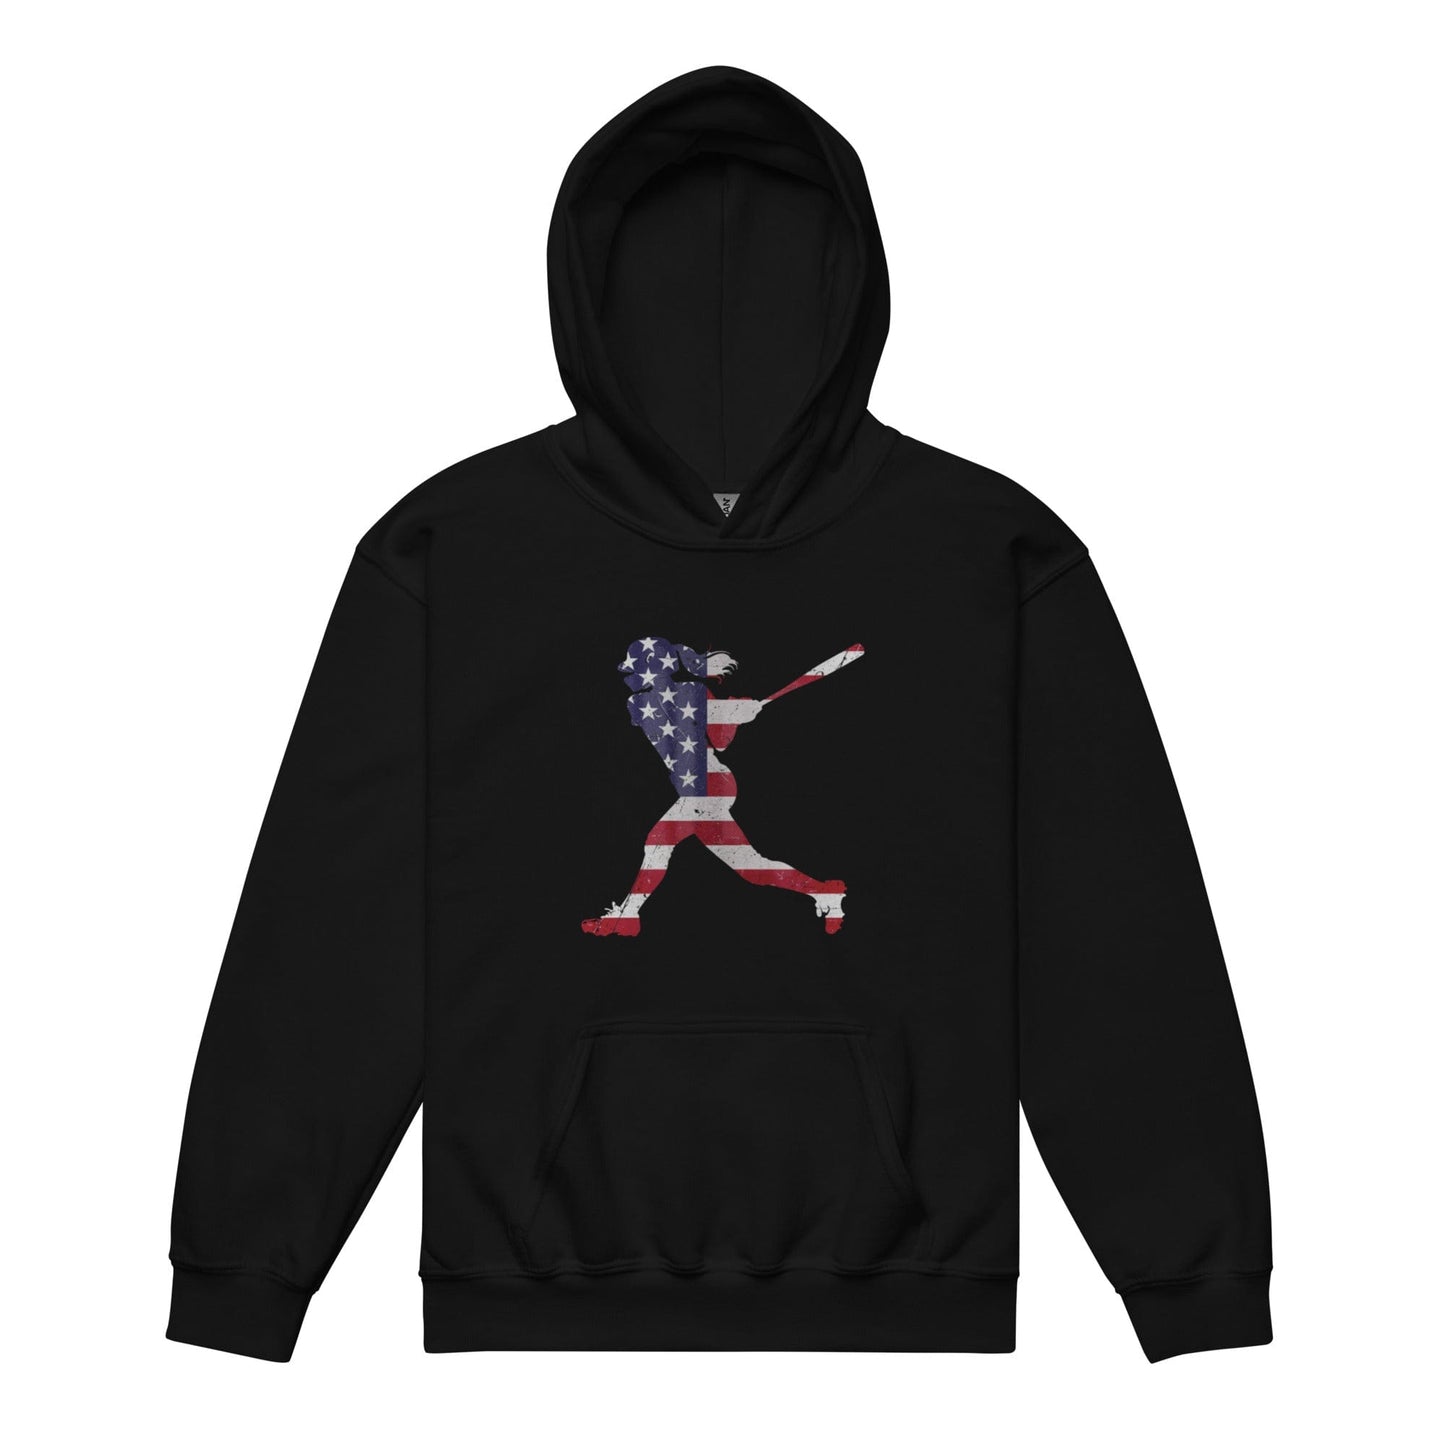 American Flag Softball Batter - Youth Hoodie